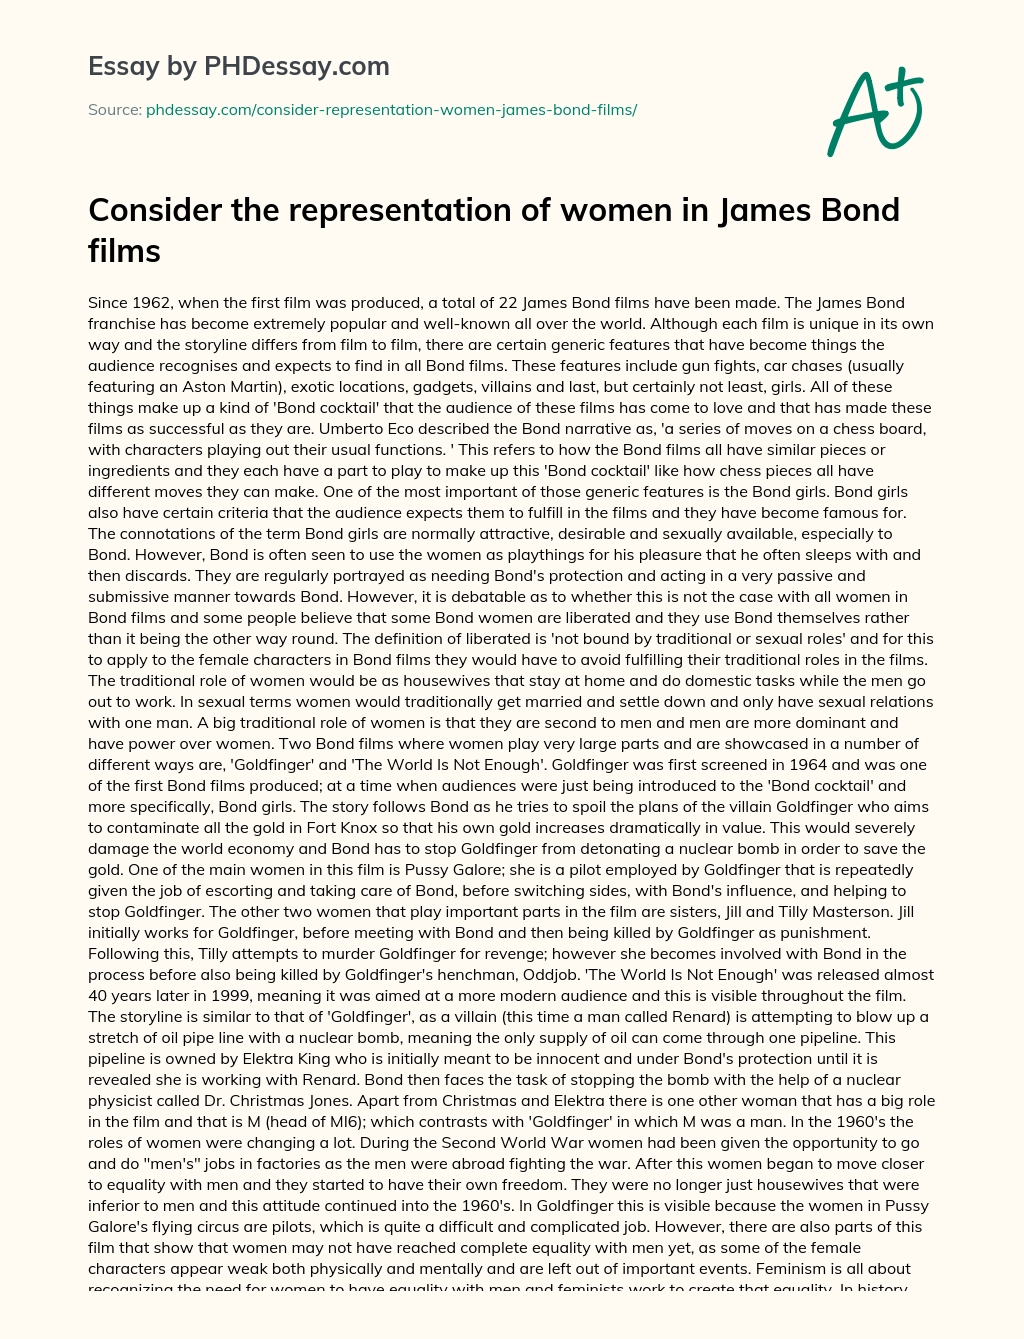 Consider the representation of women in James Bond films essay